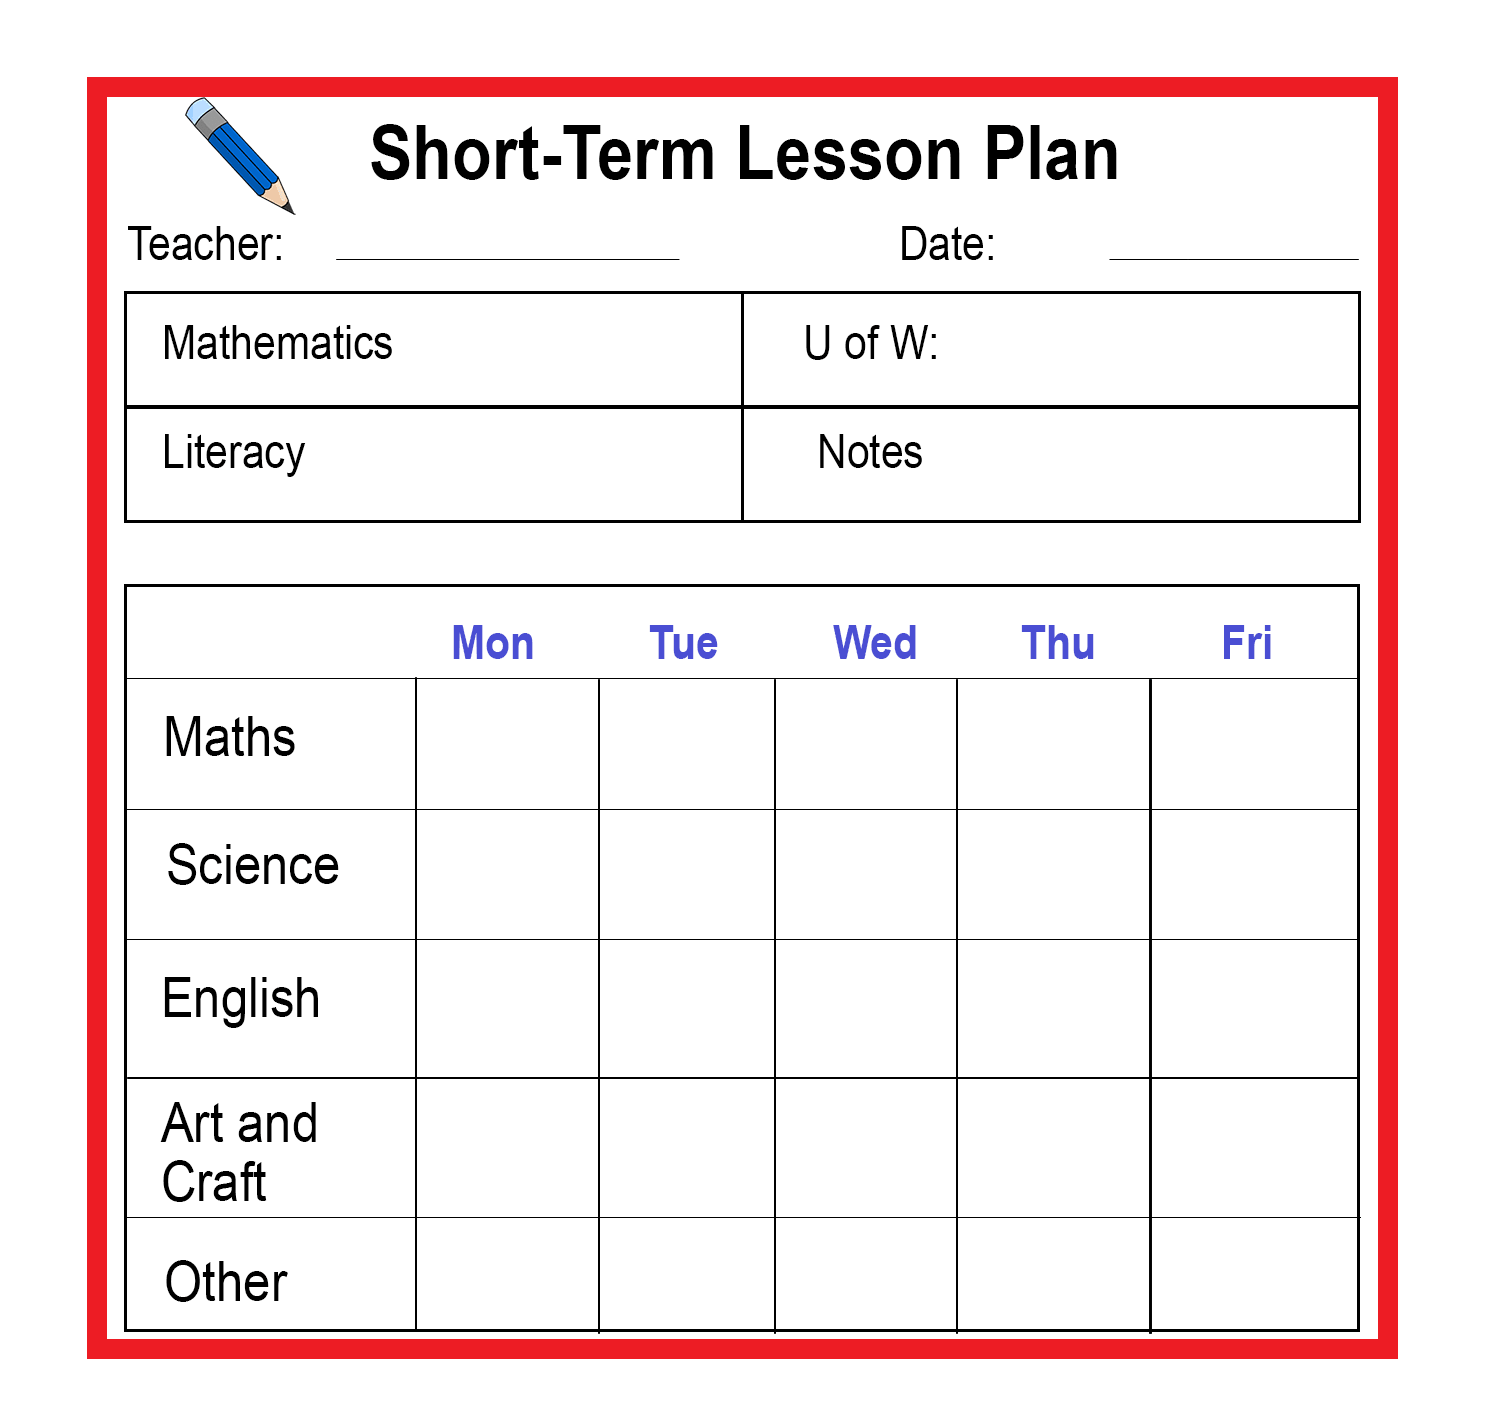 Short-Term Lesson Plan-min